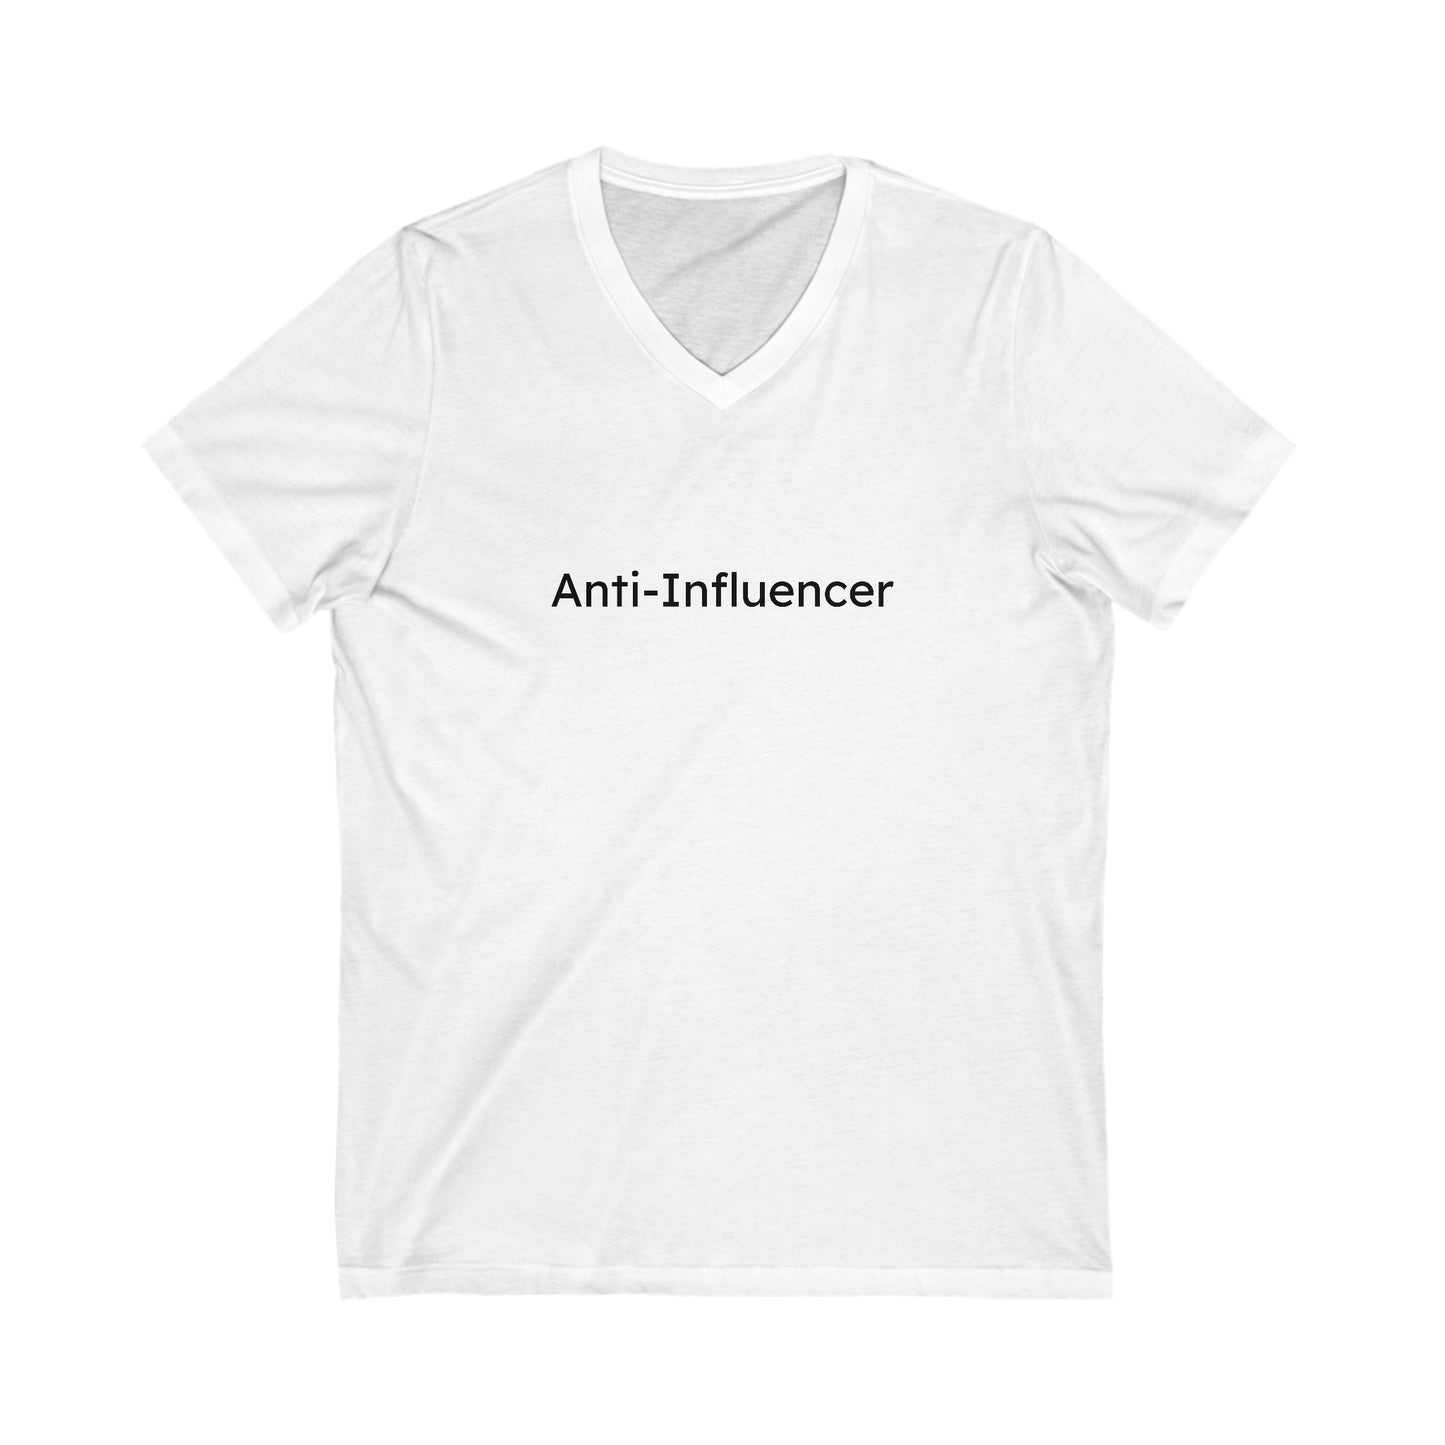 "Anti-Influencer" Short Sleeve V-Neck Tee